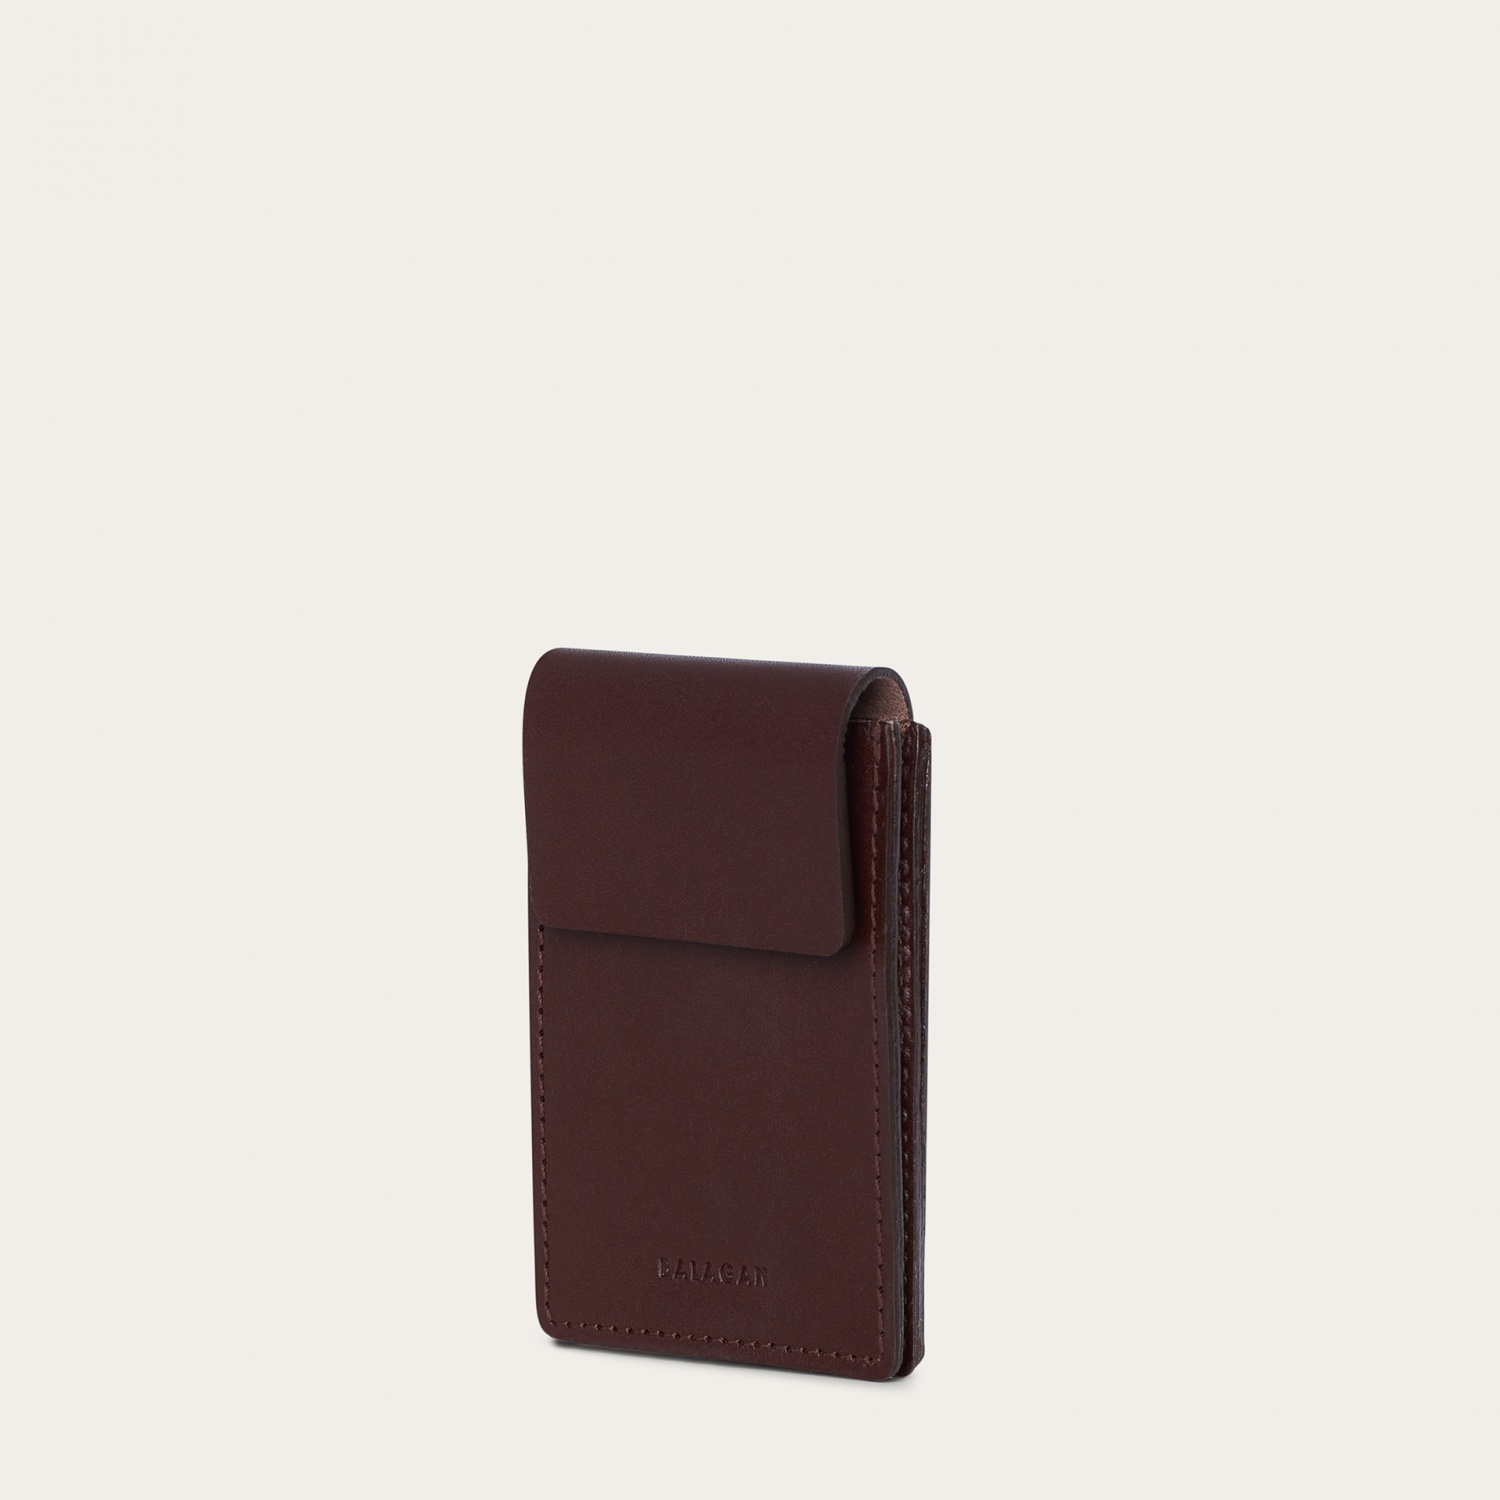  Anahi wallet, dark chocolate-2 